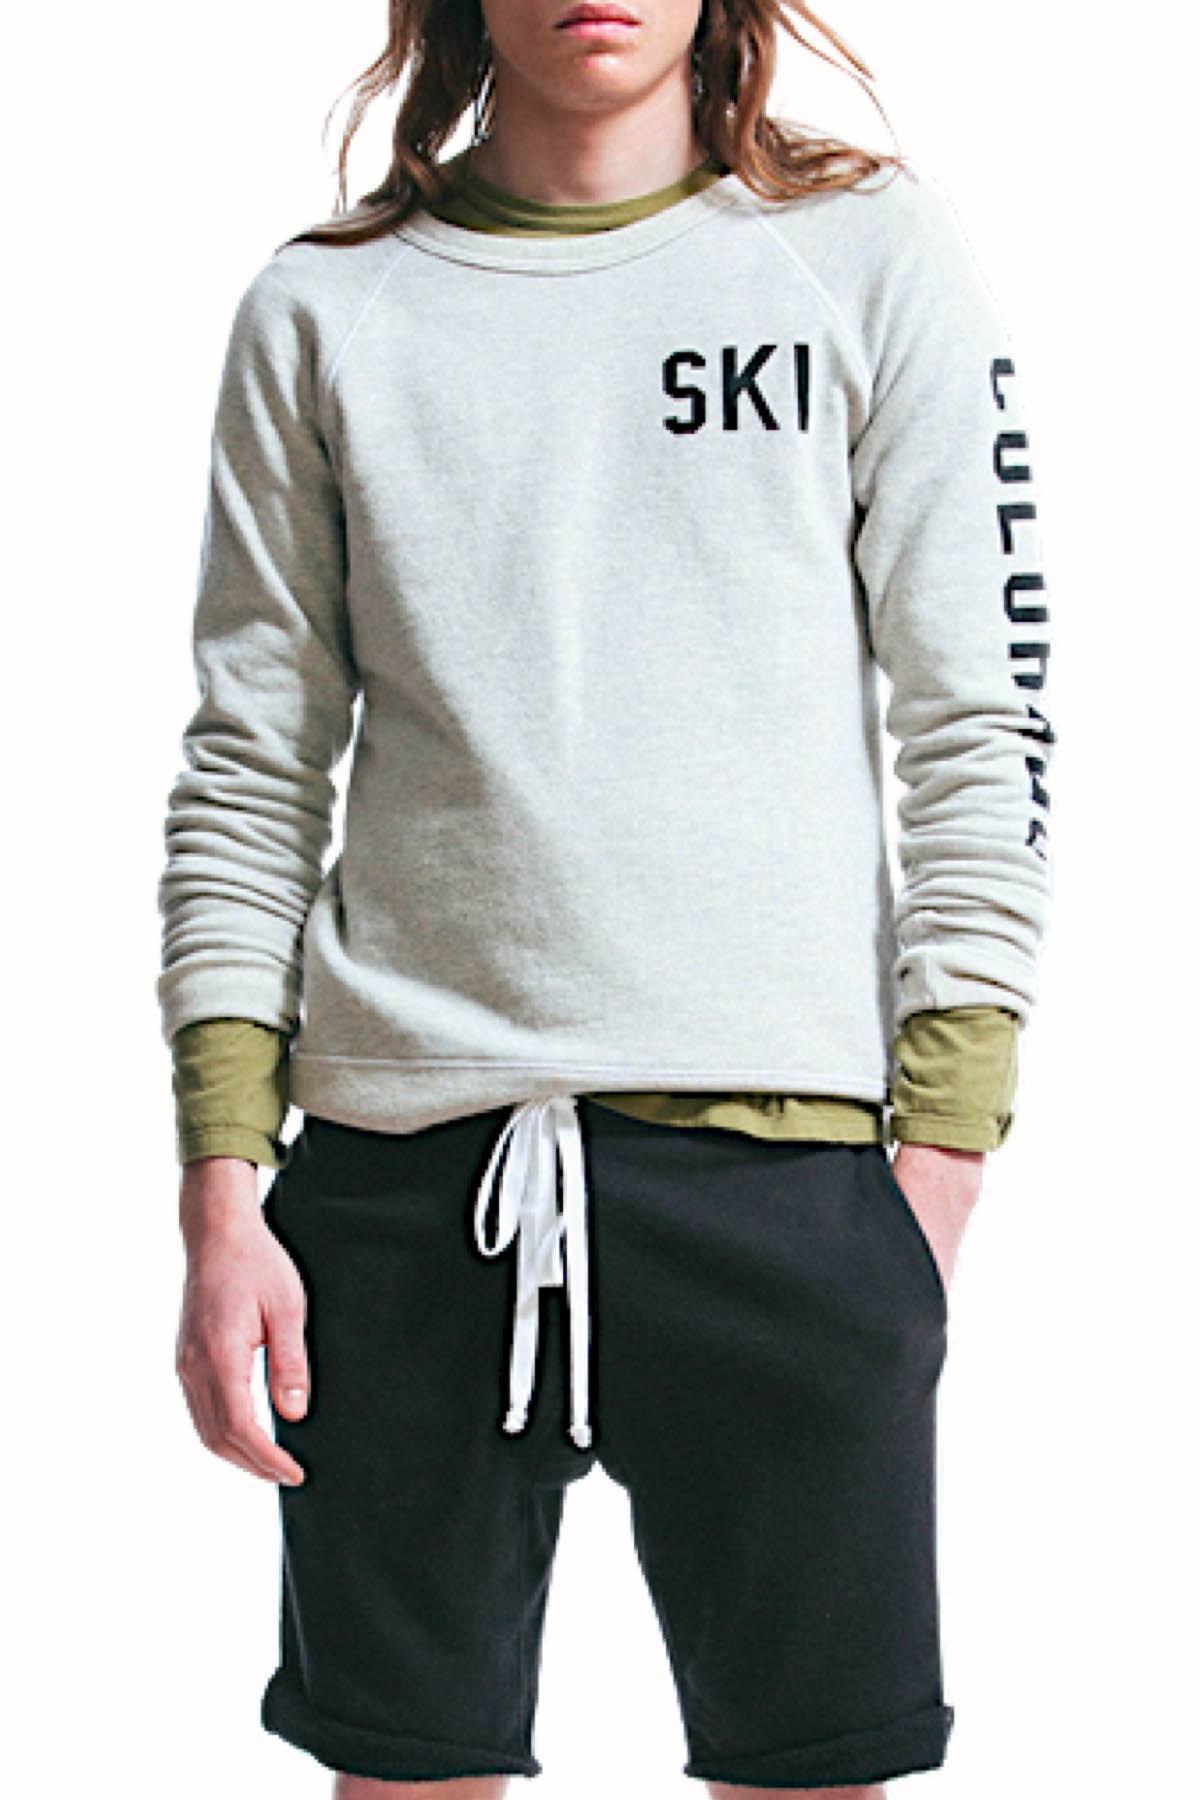 Rxmance Unisex Oatmeal Ski Sweatshirt